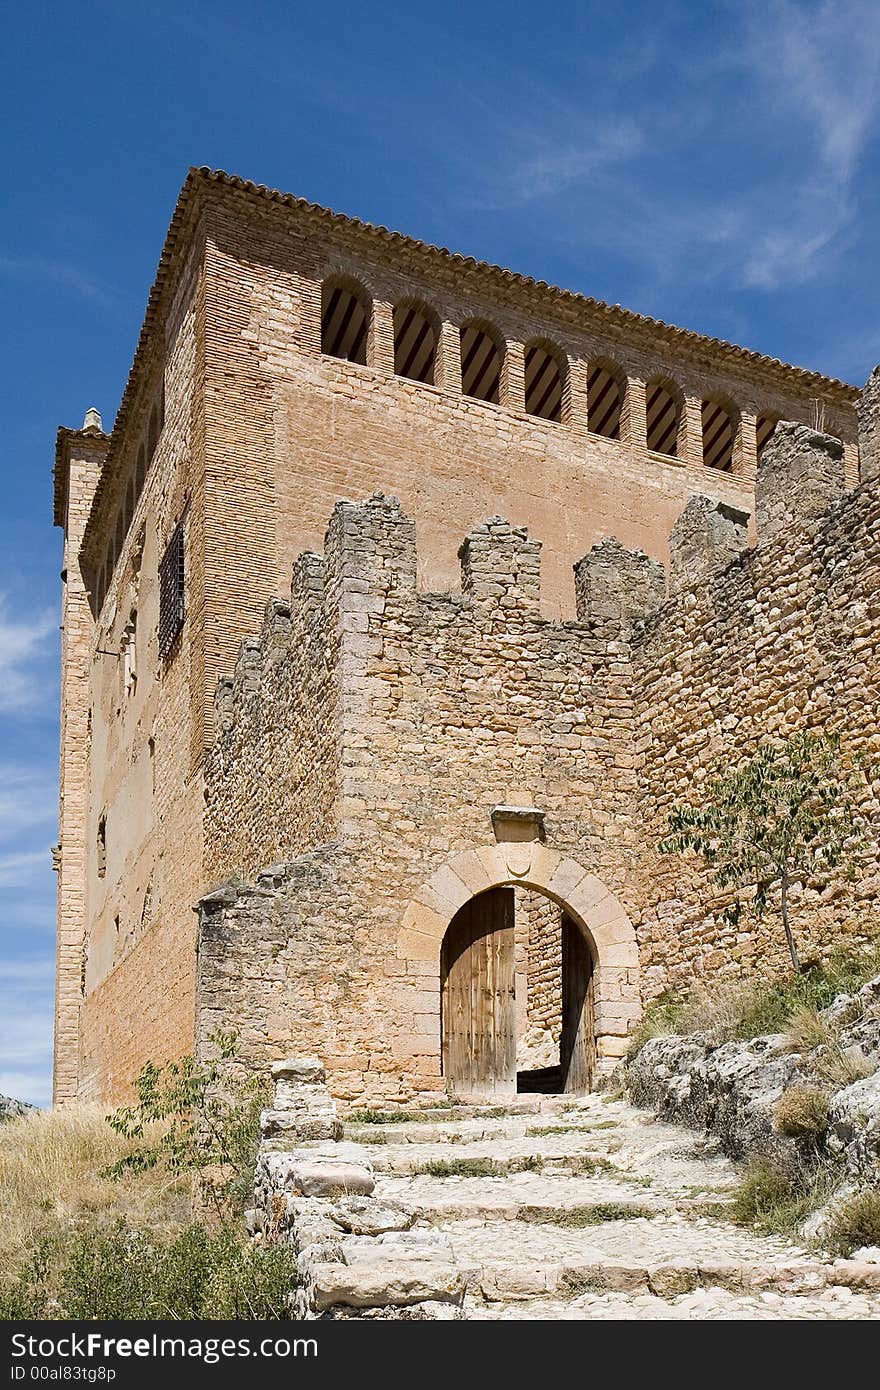 Collegiate church of Alquezar, Huesca, Aragon, Spain. Collegiate church of Alquezar, Huesca, Aragon, Spain